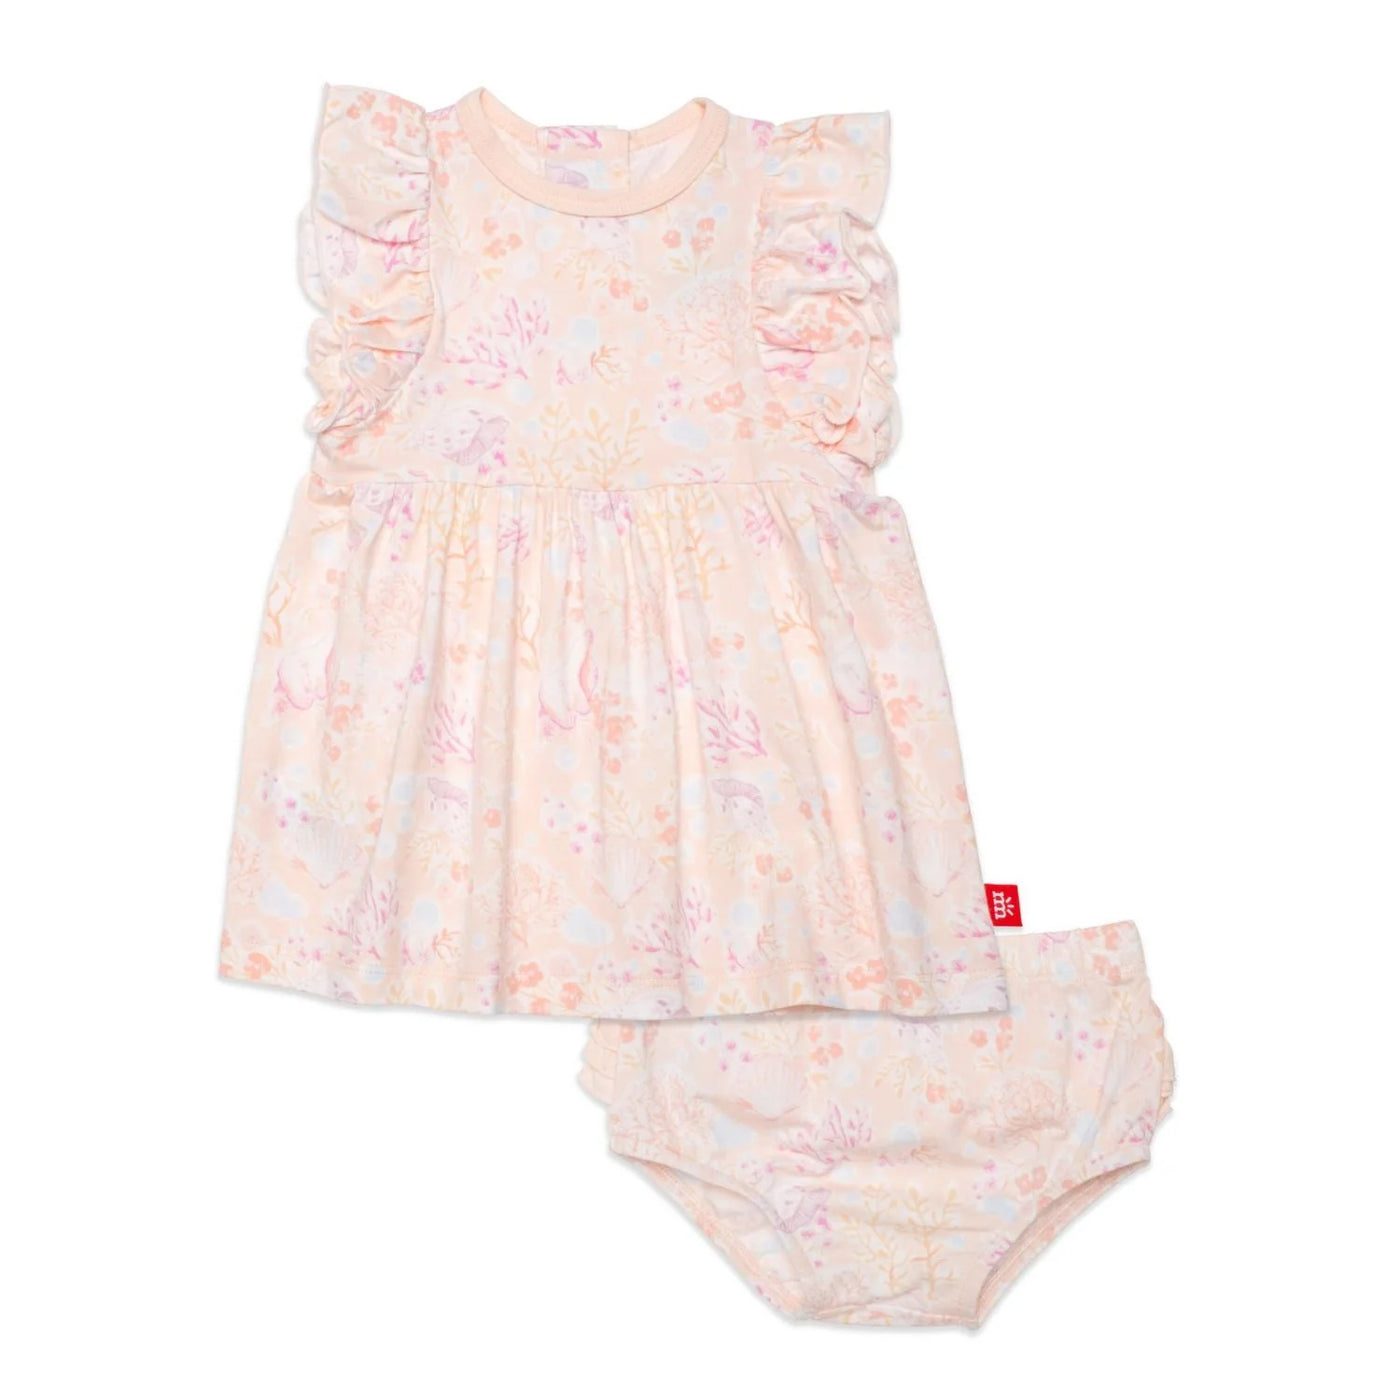 Coral floral baby dress set